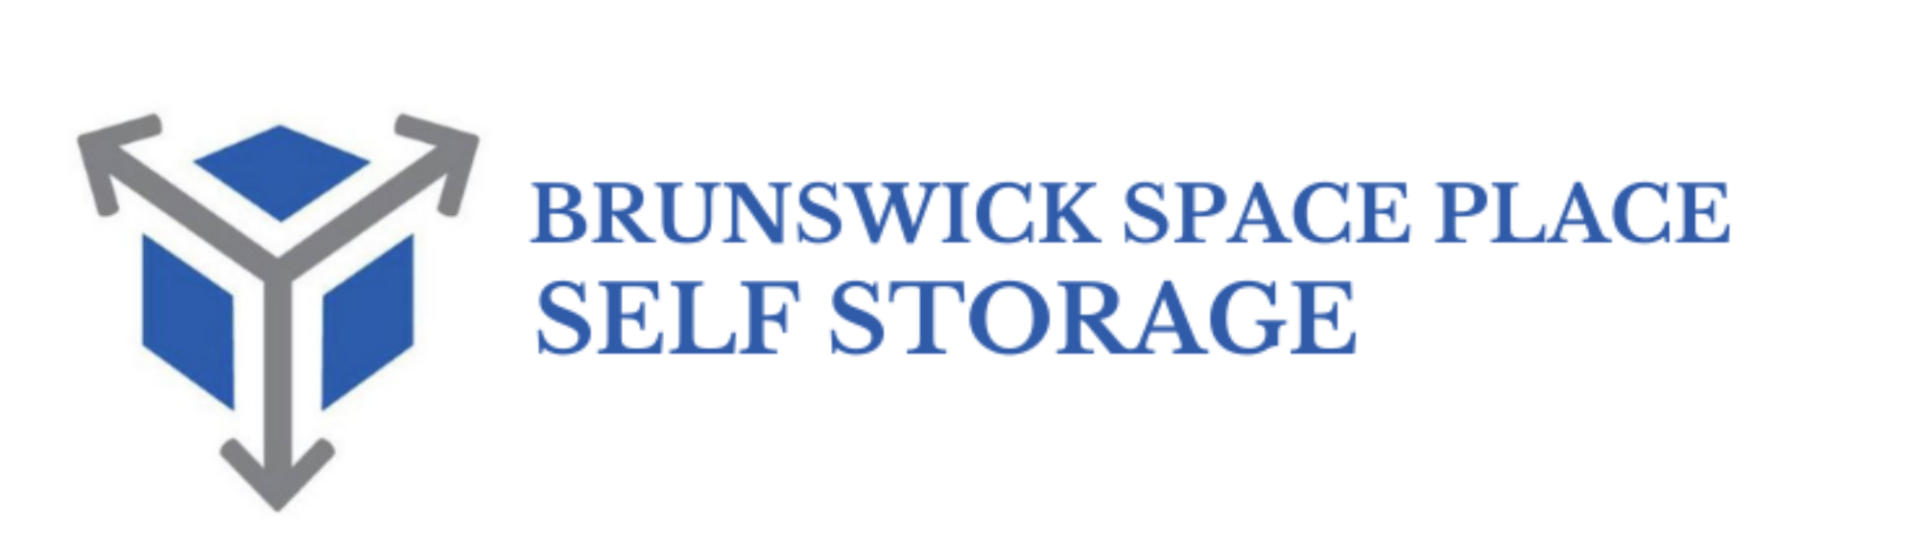 Brunswick Space Place Self Storage logo.